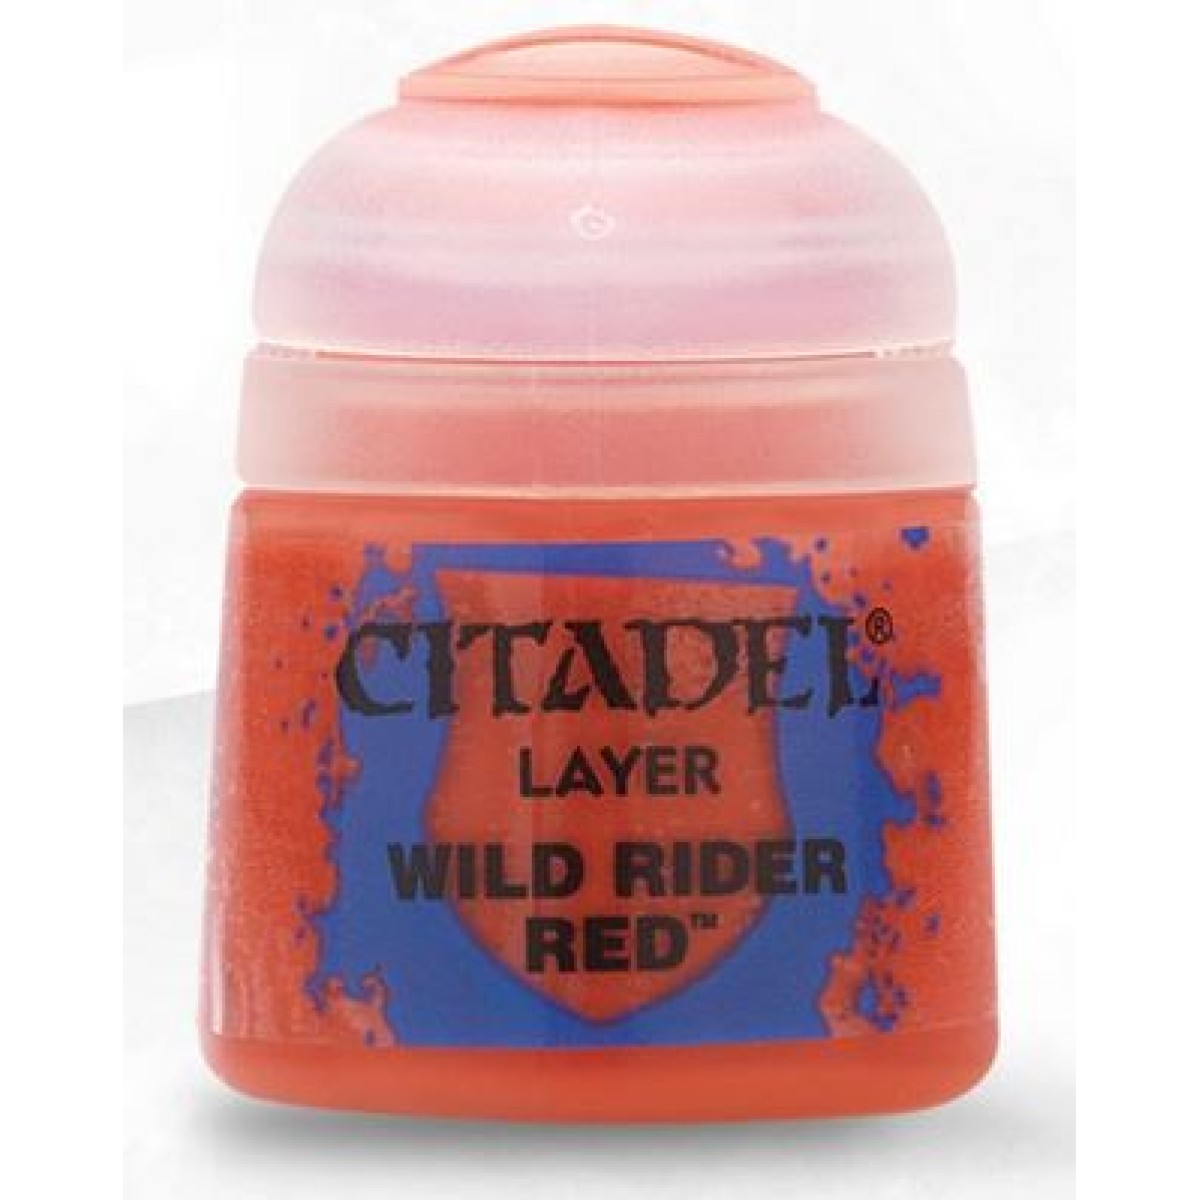 Citadel Layer Paint - Wild Rider Red